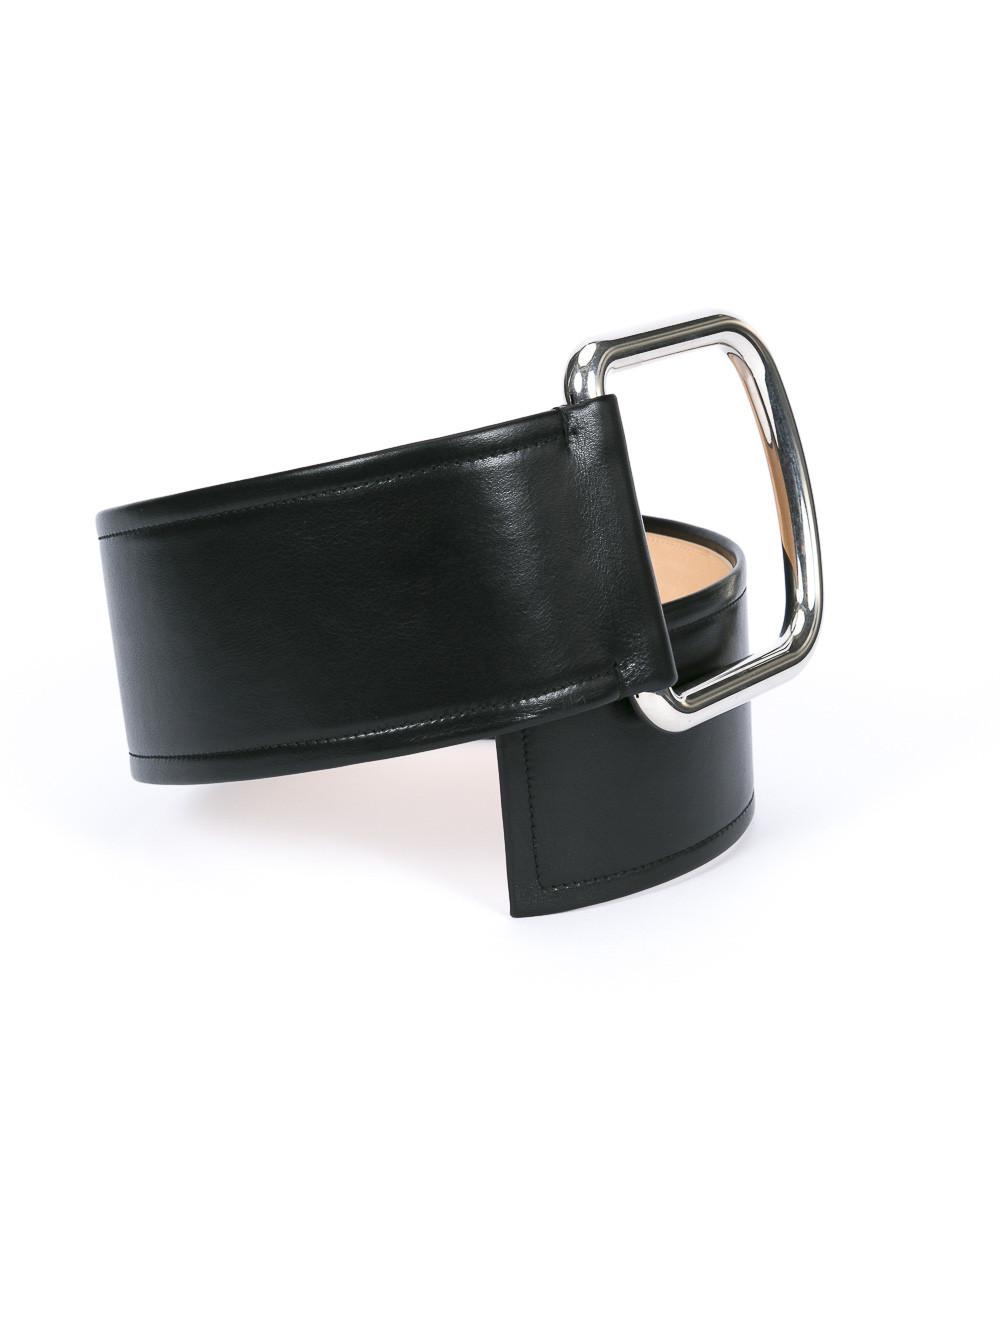 Acne Studios Leather Volt Waist Belt in Black | Lyst